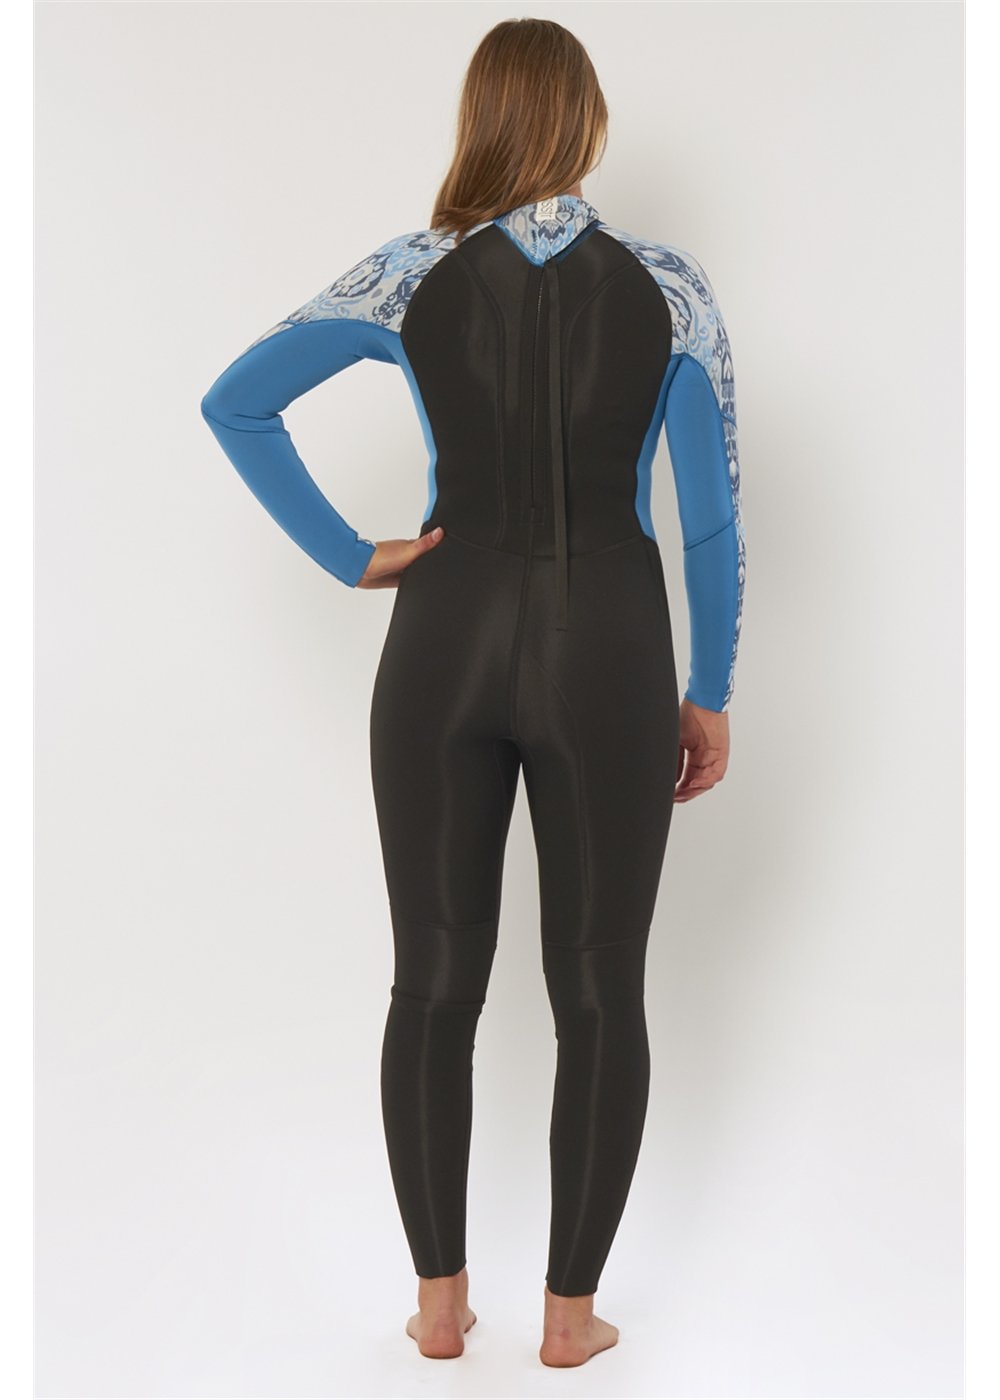 Summer Seas Clr Block Bk Zip Full Suit Wetsuit - Sisstrevolution